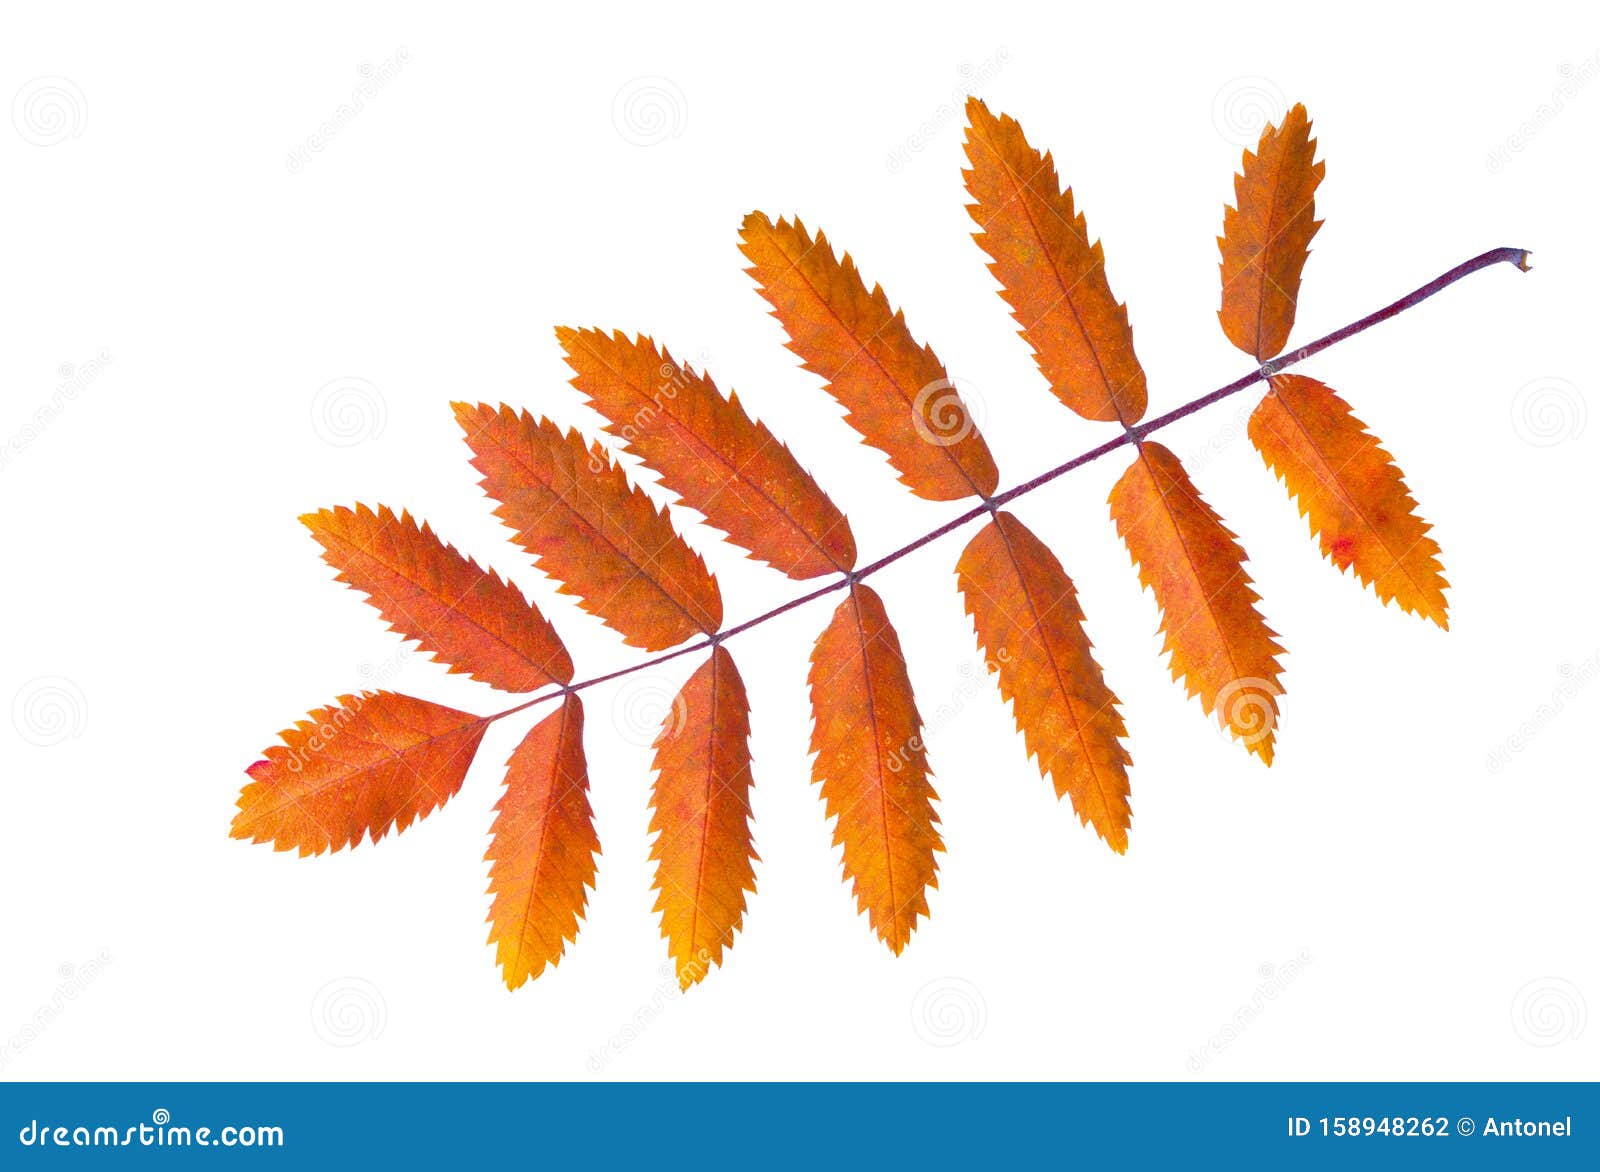 Colorful Autumn Rowan Leaf Isolated on White Background Stock Photo ...